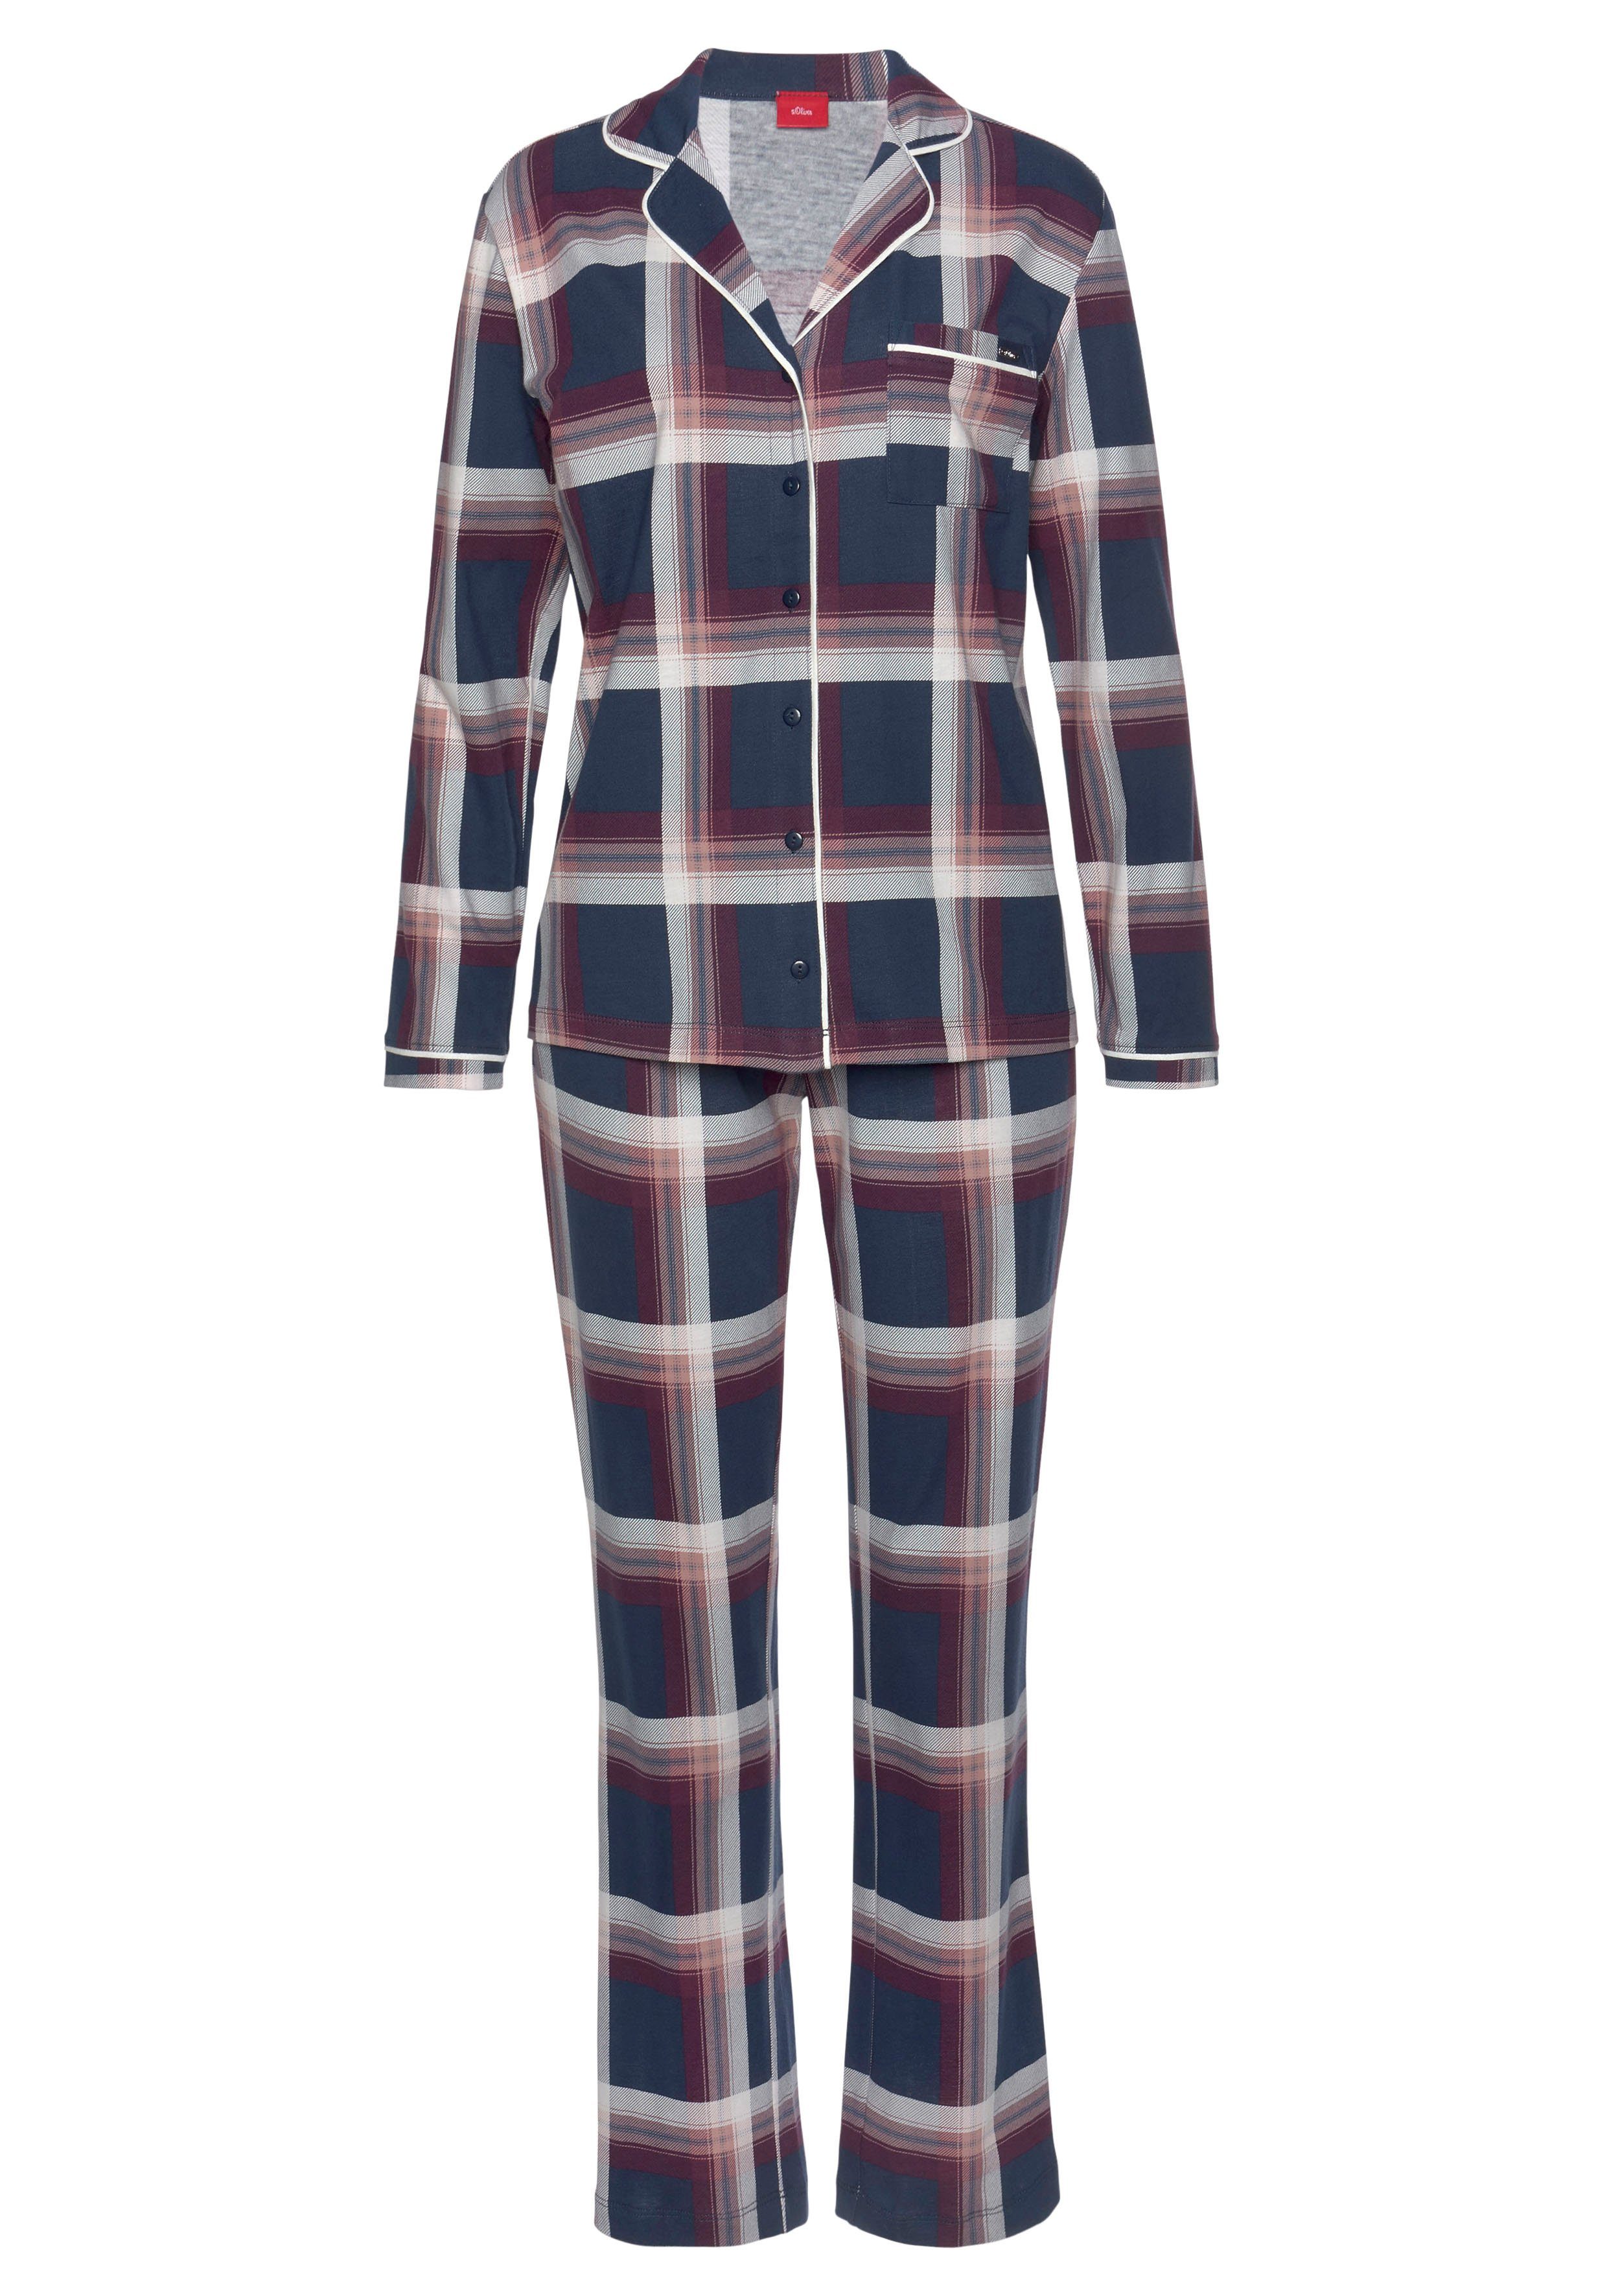 (2 Pyjama im klassischen tlg) Karo-Muster s.Oliver